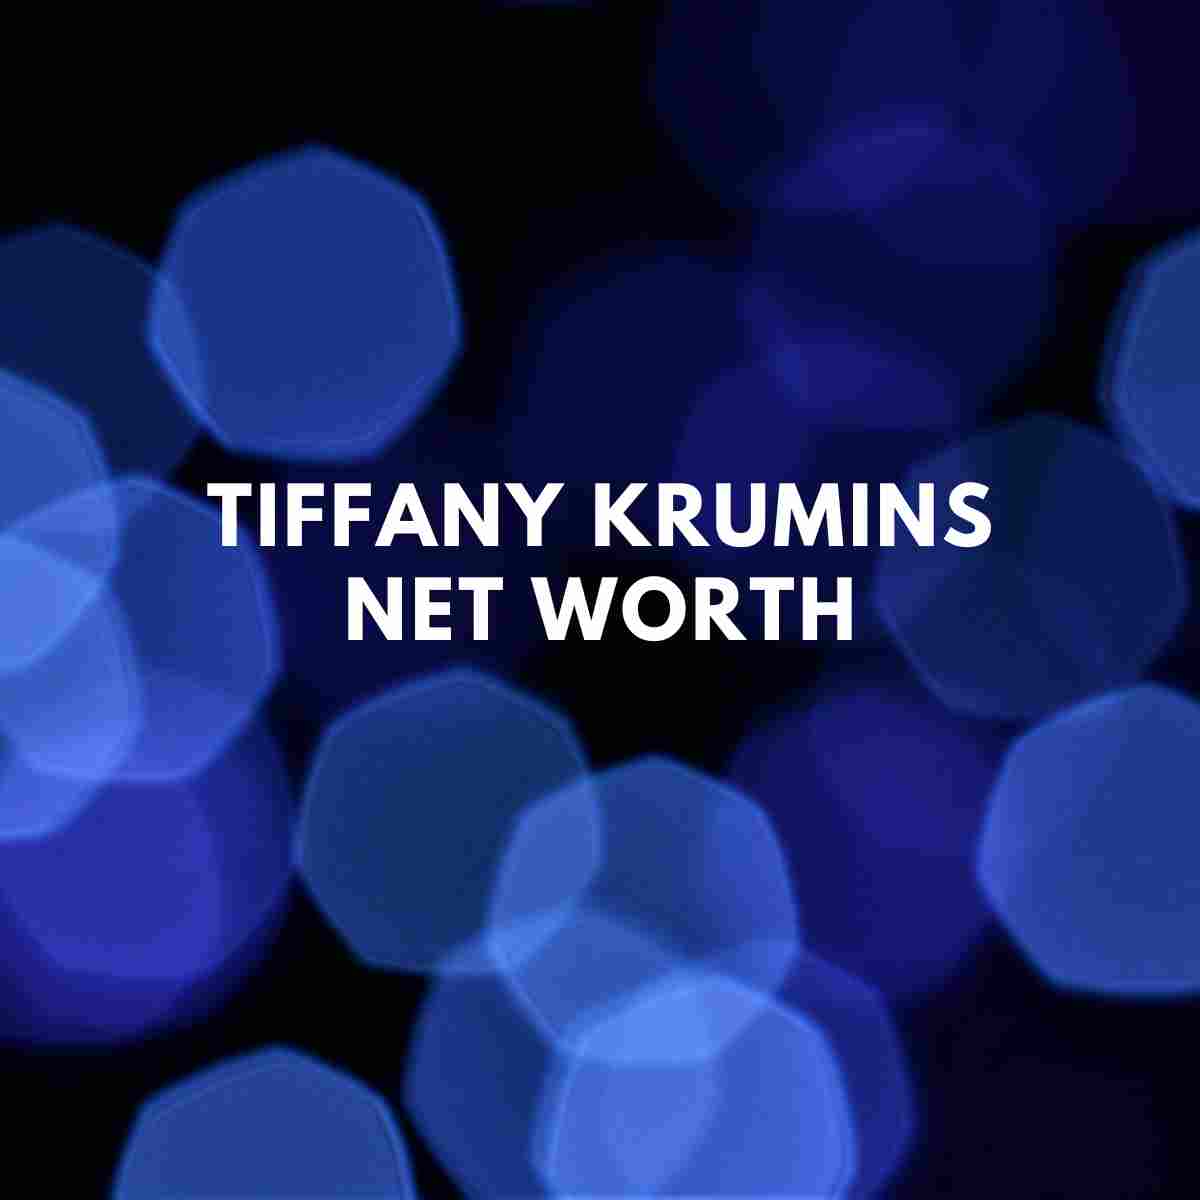 Tiffany Krumins net worth